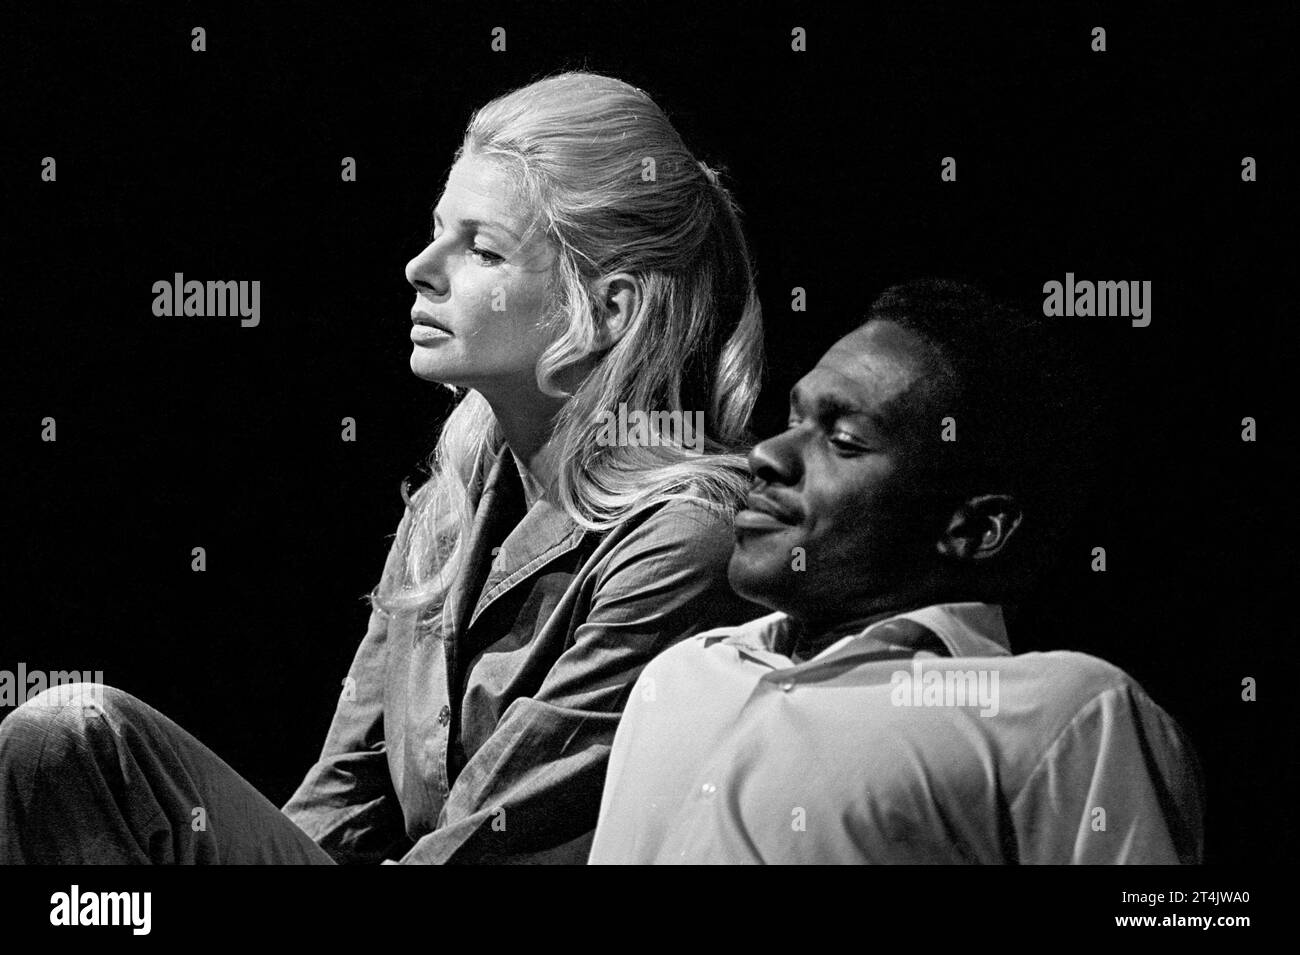 Mary Peach (Gail), Rudolph Walker (Scott) en DON'T GAS THE BLACK de Barry Reckord en el Open Space Theatre, Londres WC1 21/10/1969 diseño: Len Drinkwater director: Lloyd Reckord Foto de stock